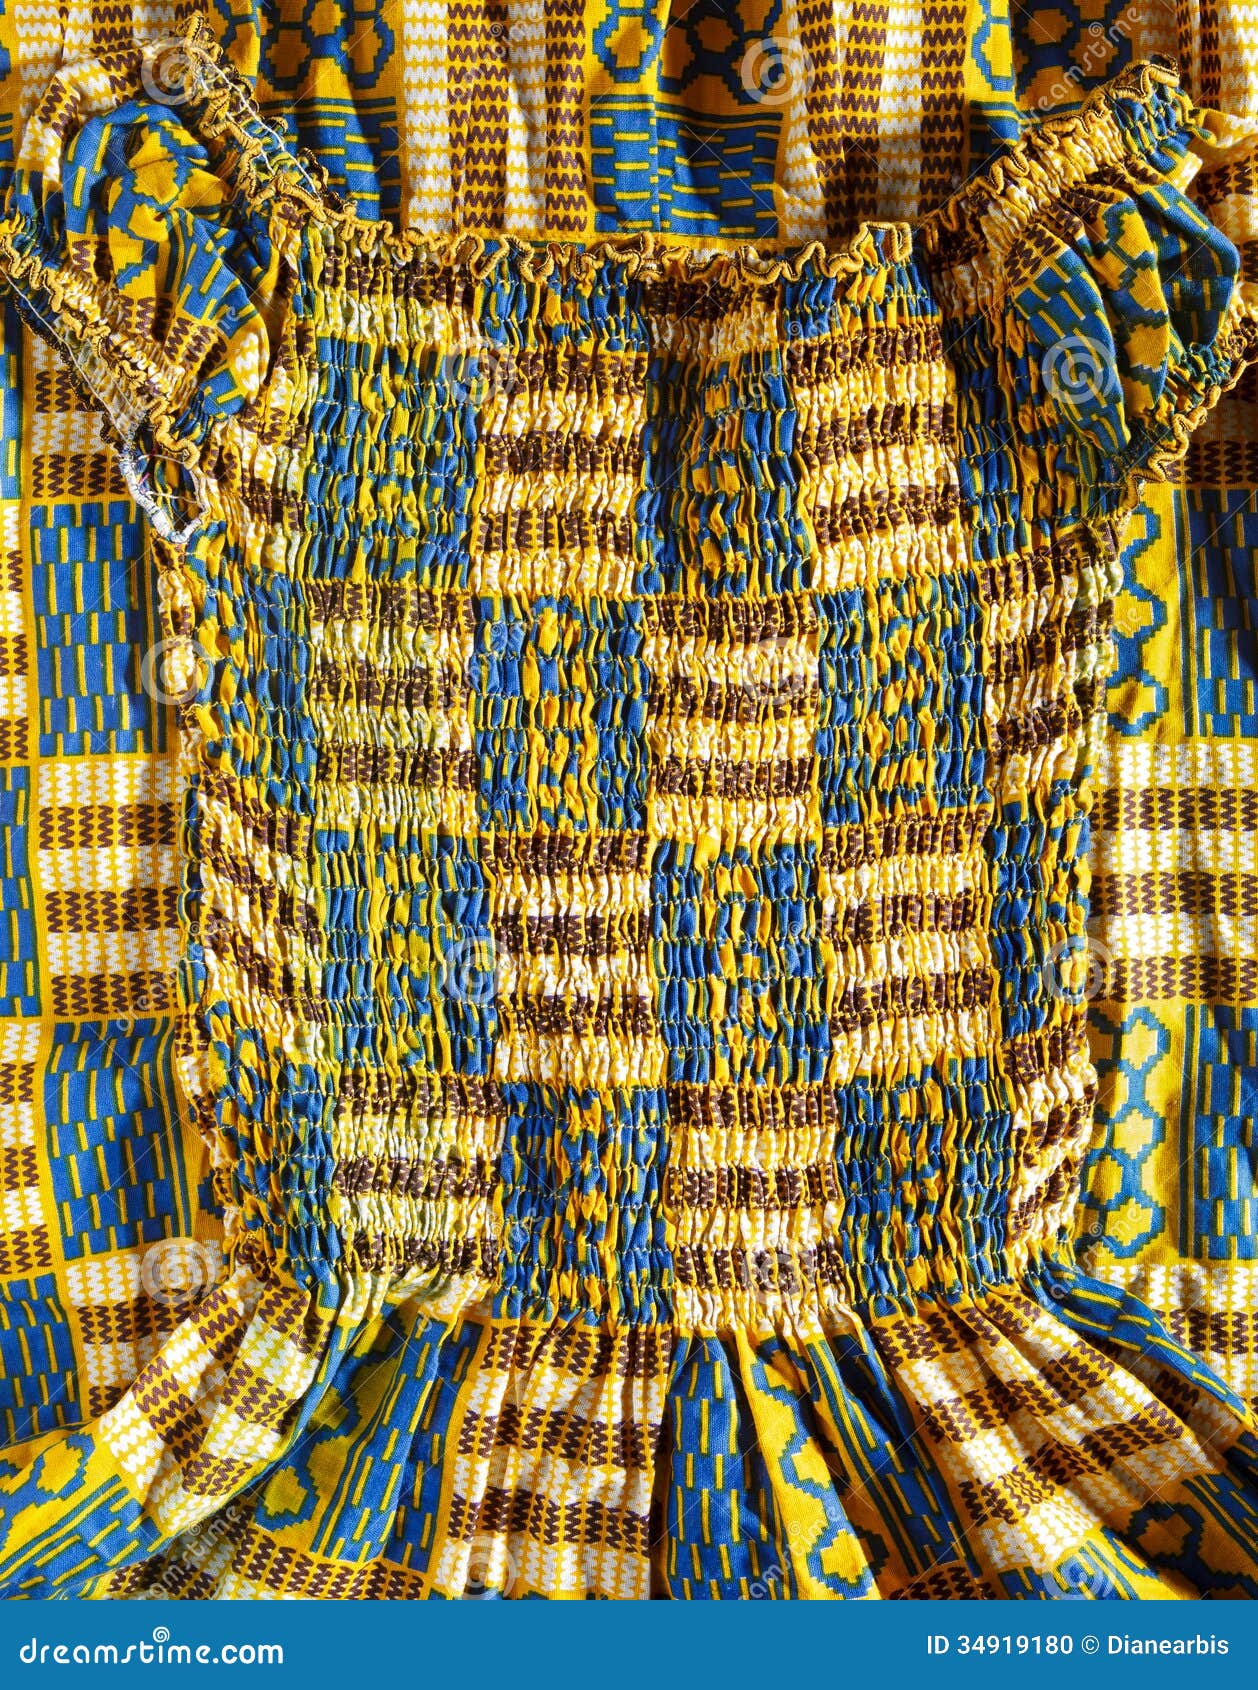 Kente Cloth from Ghana - Maryte Collard